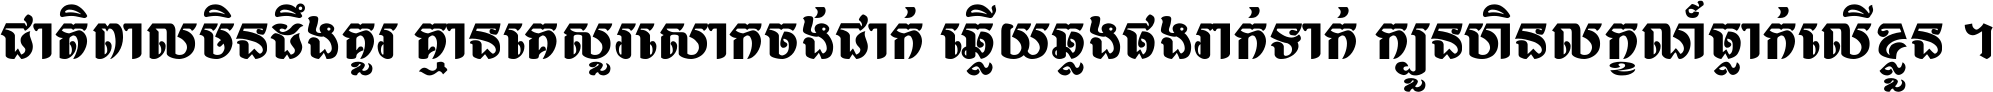 Khmer Chhay Style 2